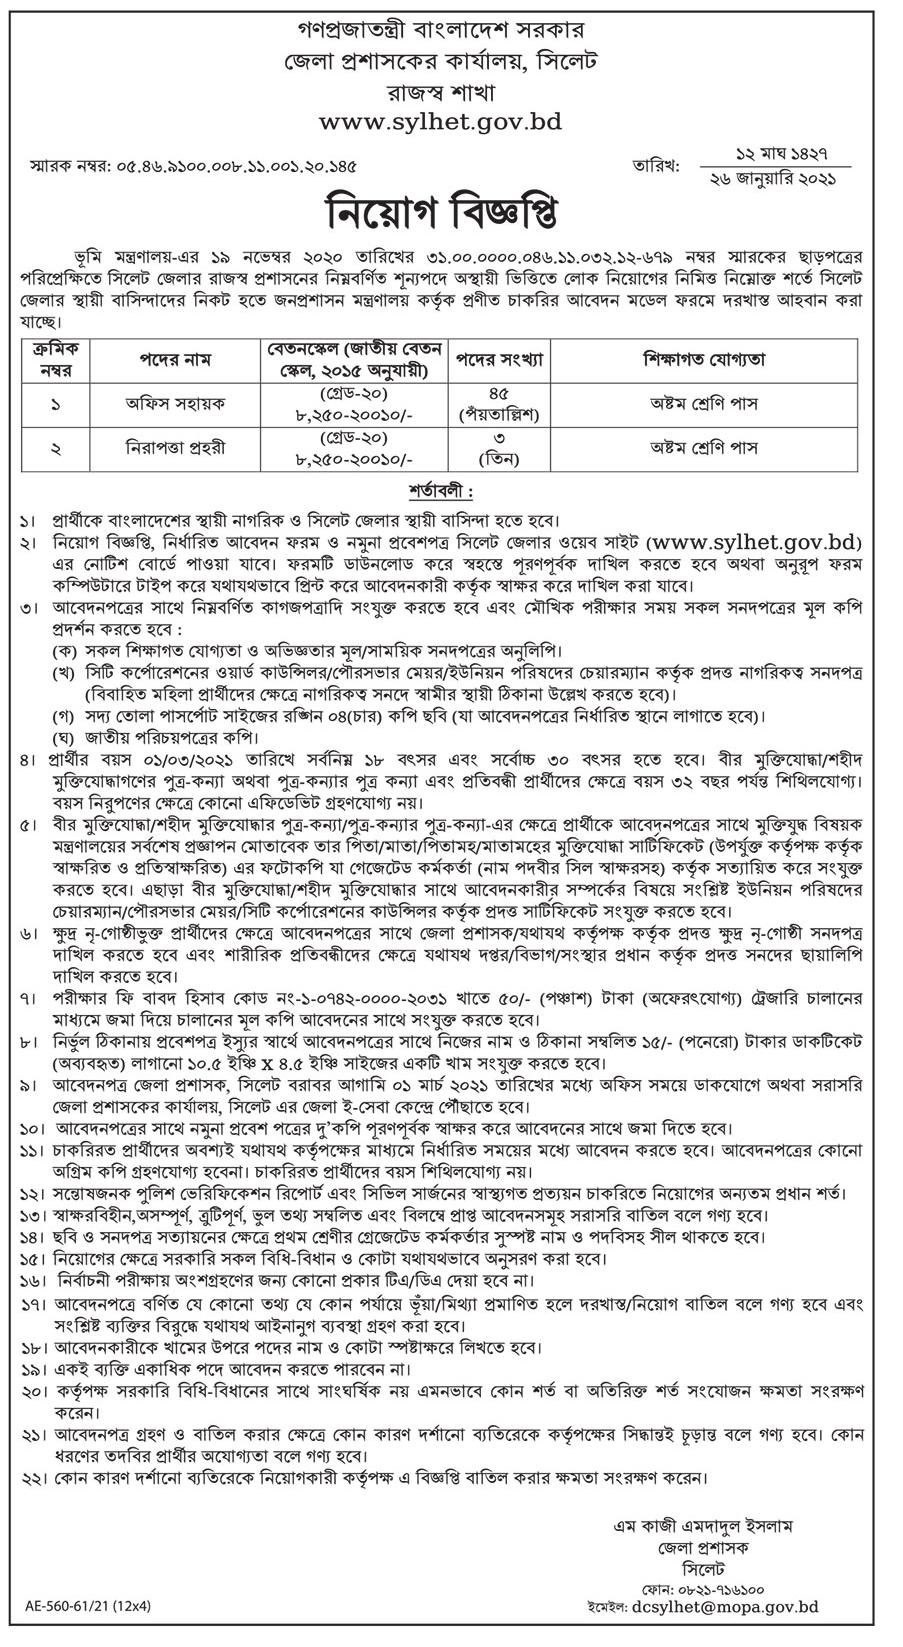 Sylhet dc office job circular 2021 - সিলেট জেলা প্রশাসকের কার্যালয়ে নিয়োগ বিজ্ঞপ্তি ২০২১